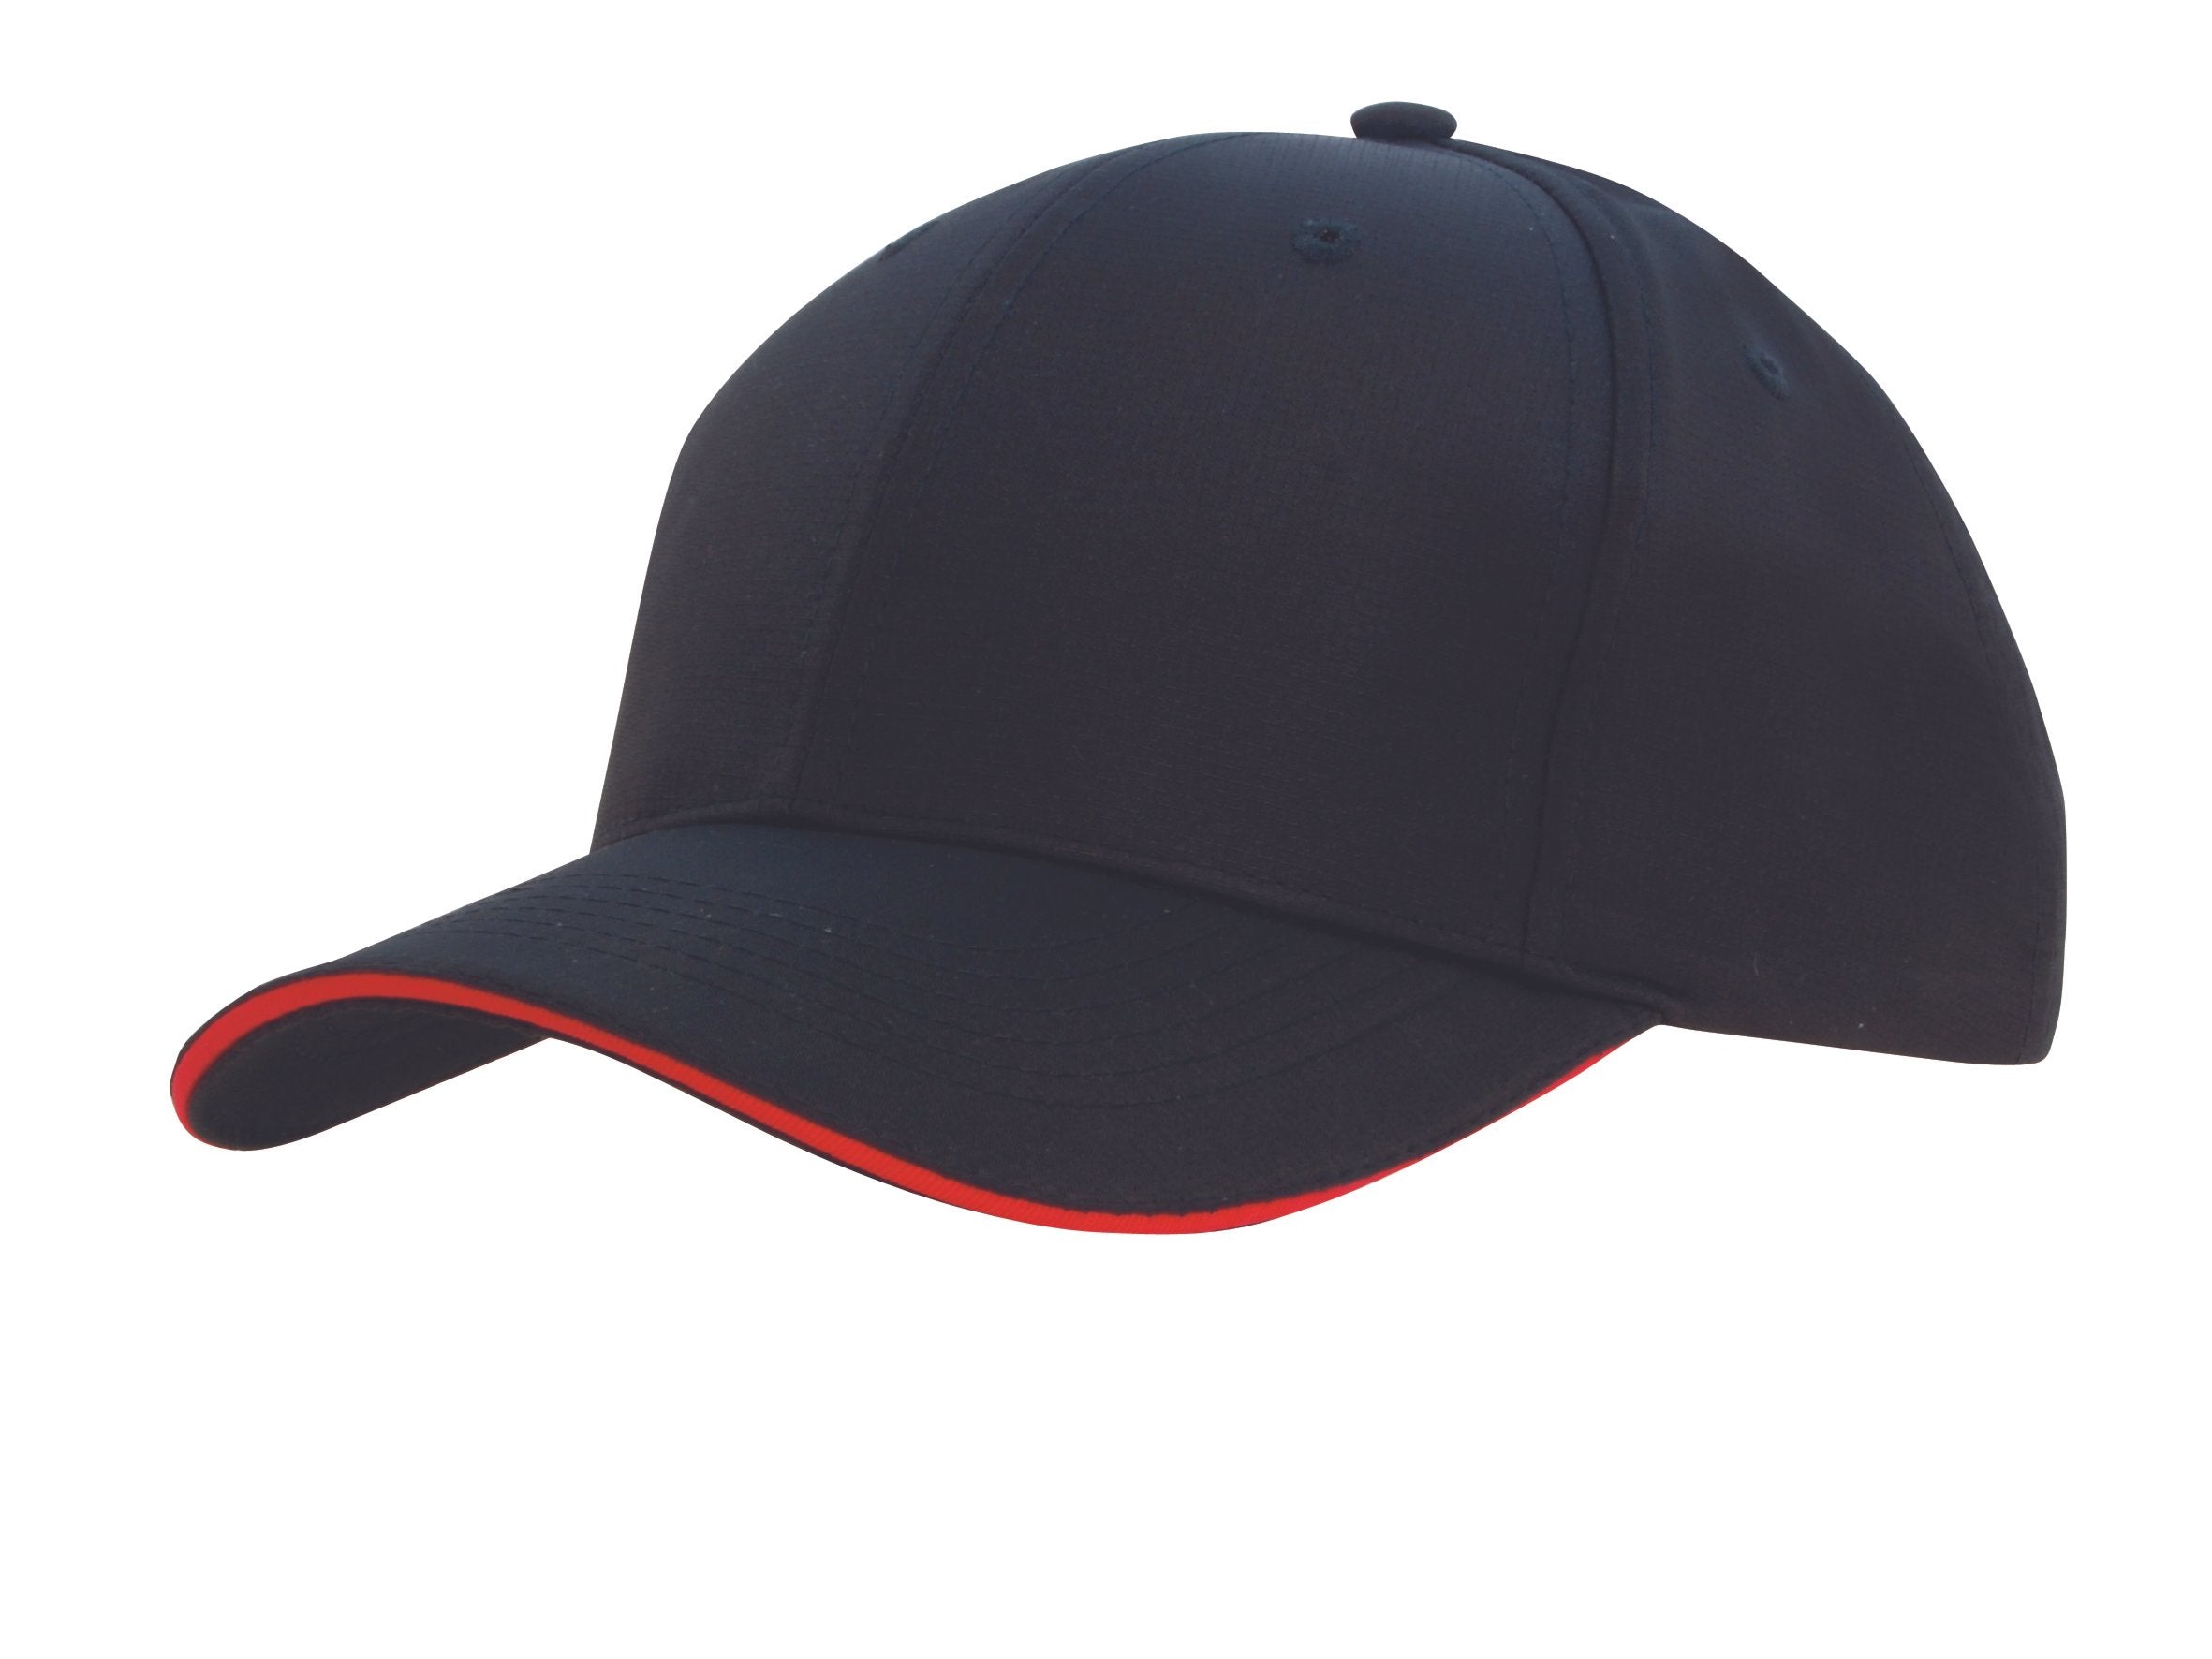 Headwear Sports Ripstop Cap With Sandwich Trim (4149)